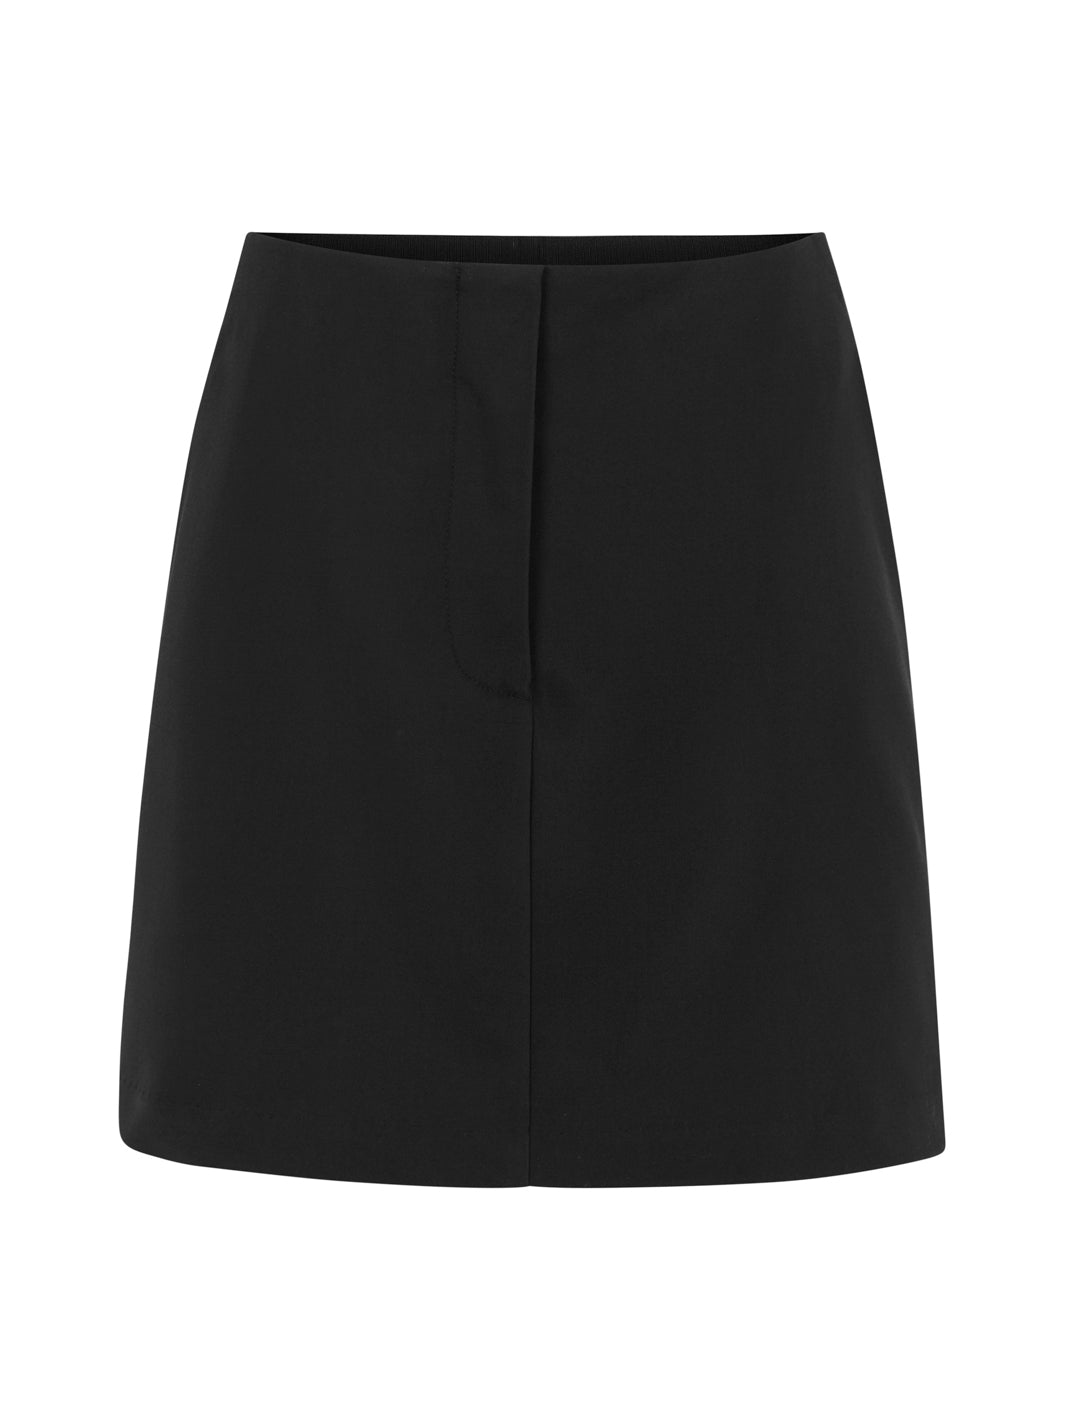 Soft Rebels Hibiscus skirt black - Online-Mode